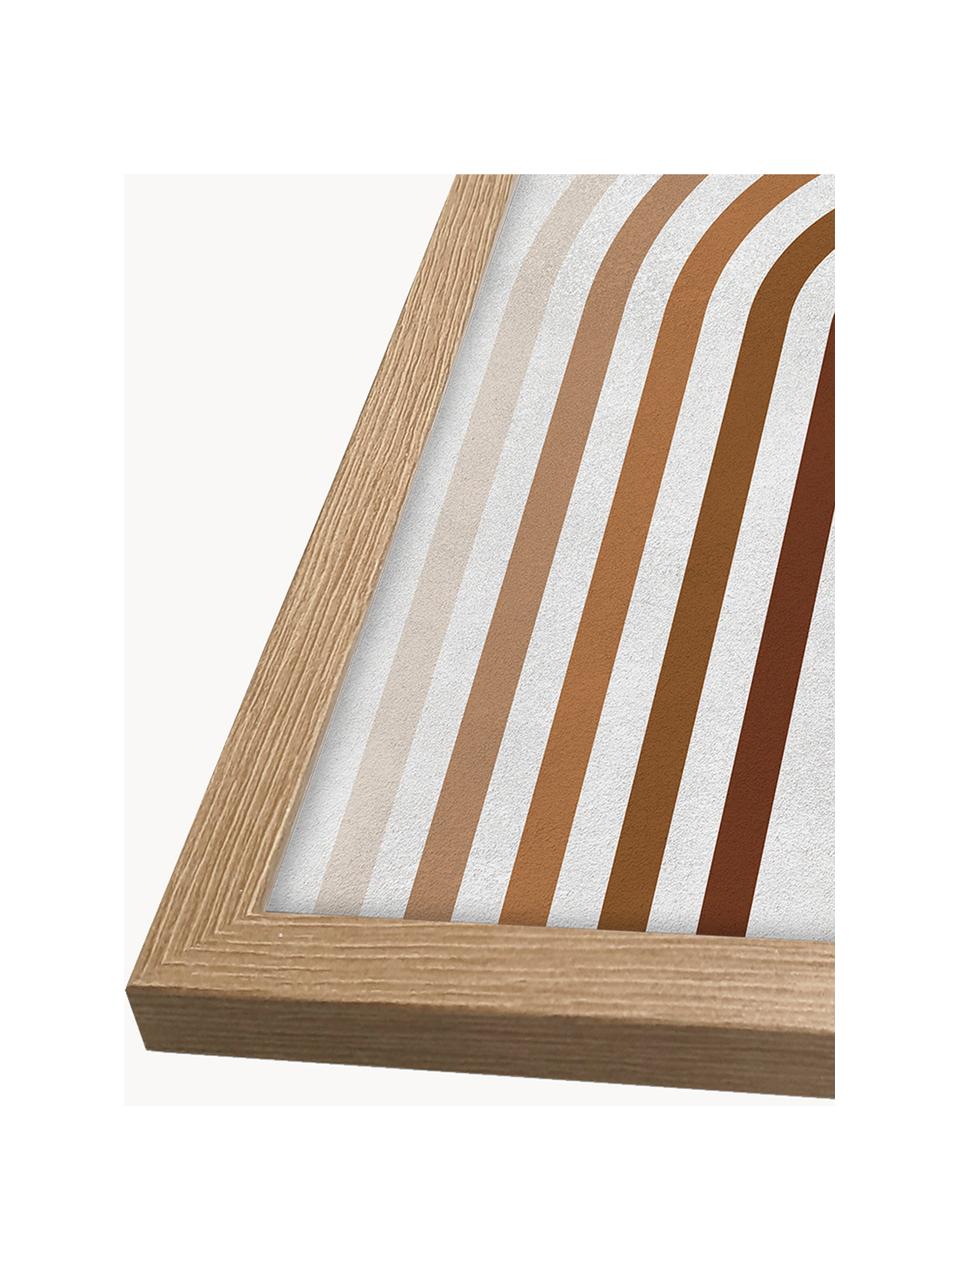 Ingelijste digitale print Upside Curves, Lijst: hout, MDF, Beige- en bruintinten, B 32 x H 42 cm